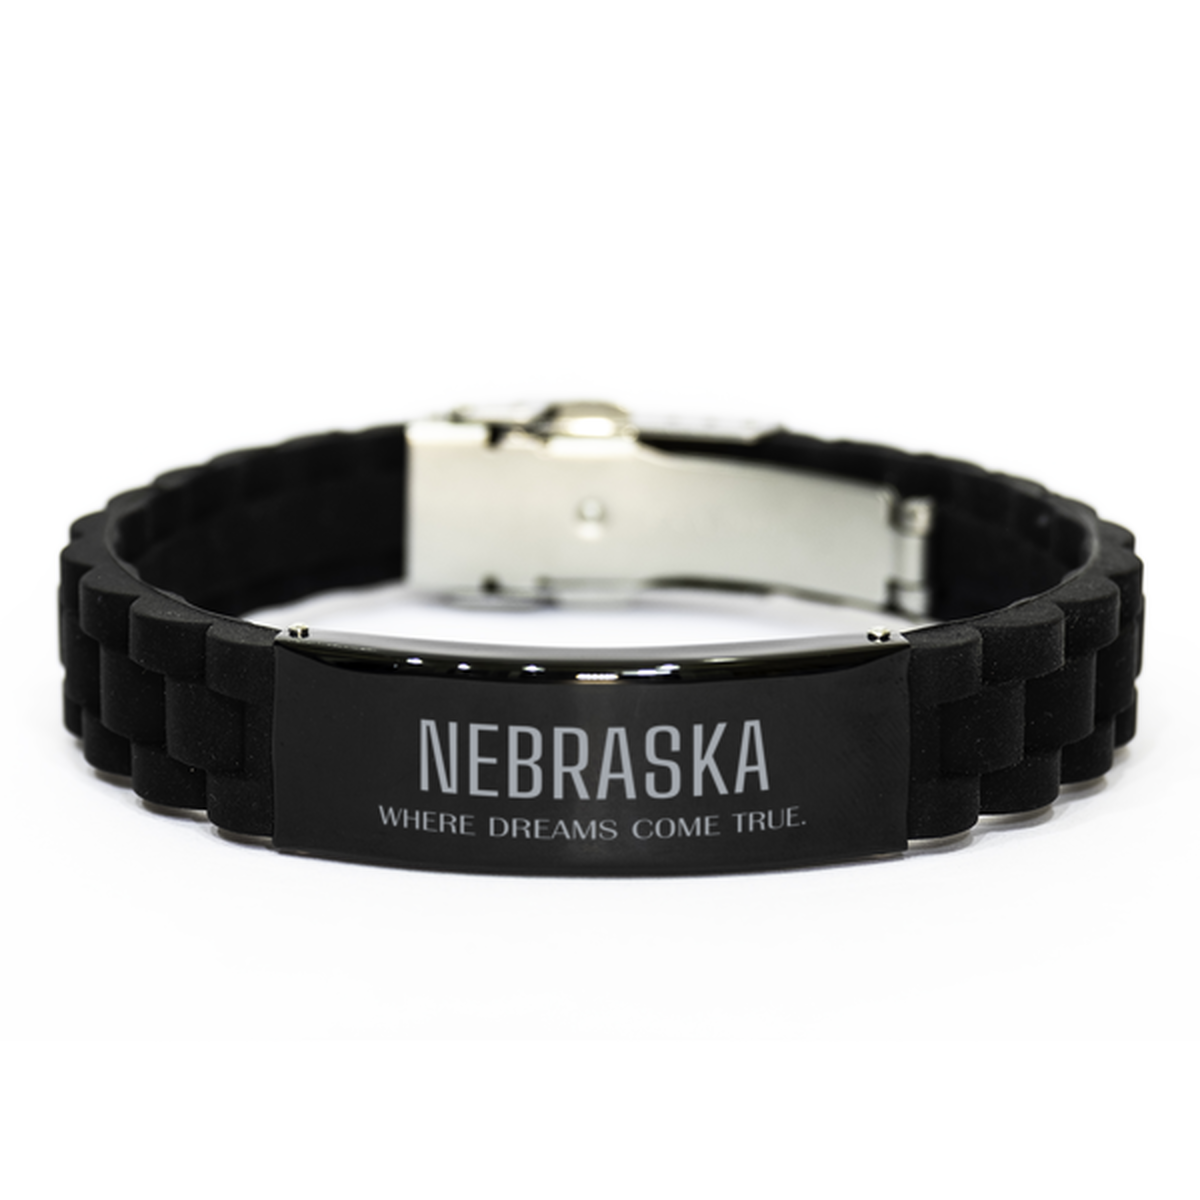 Love Nebraska State Black Glidelock Clasp Bracelet, Nebraska Where dreams come true, Birthday Inspirational Gifts For Nebraska Men, Women, Friends